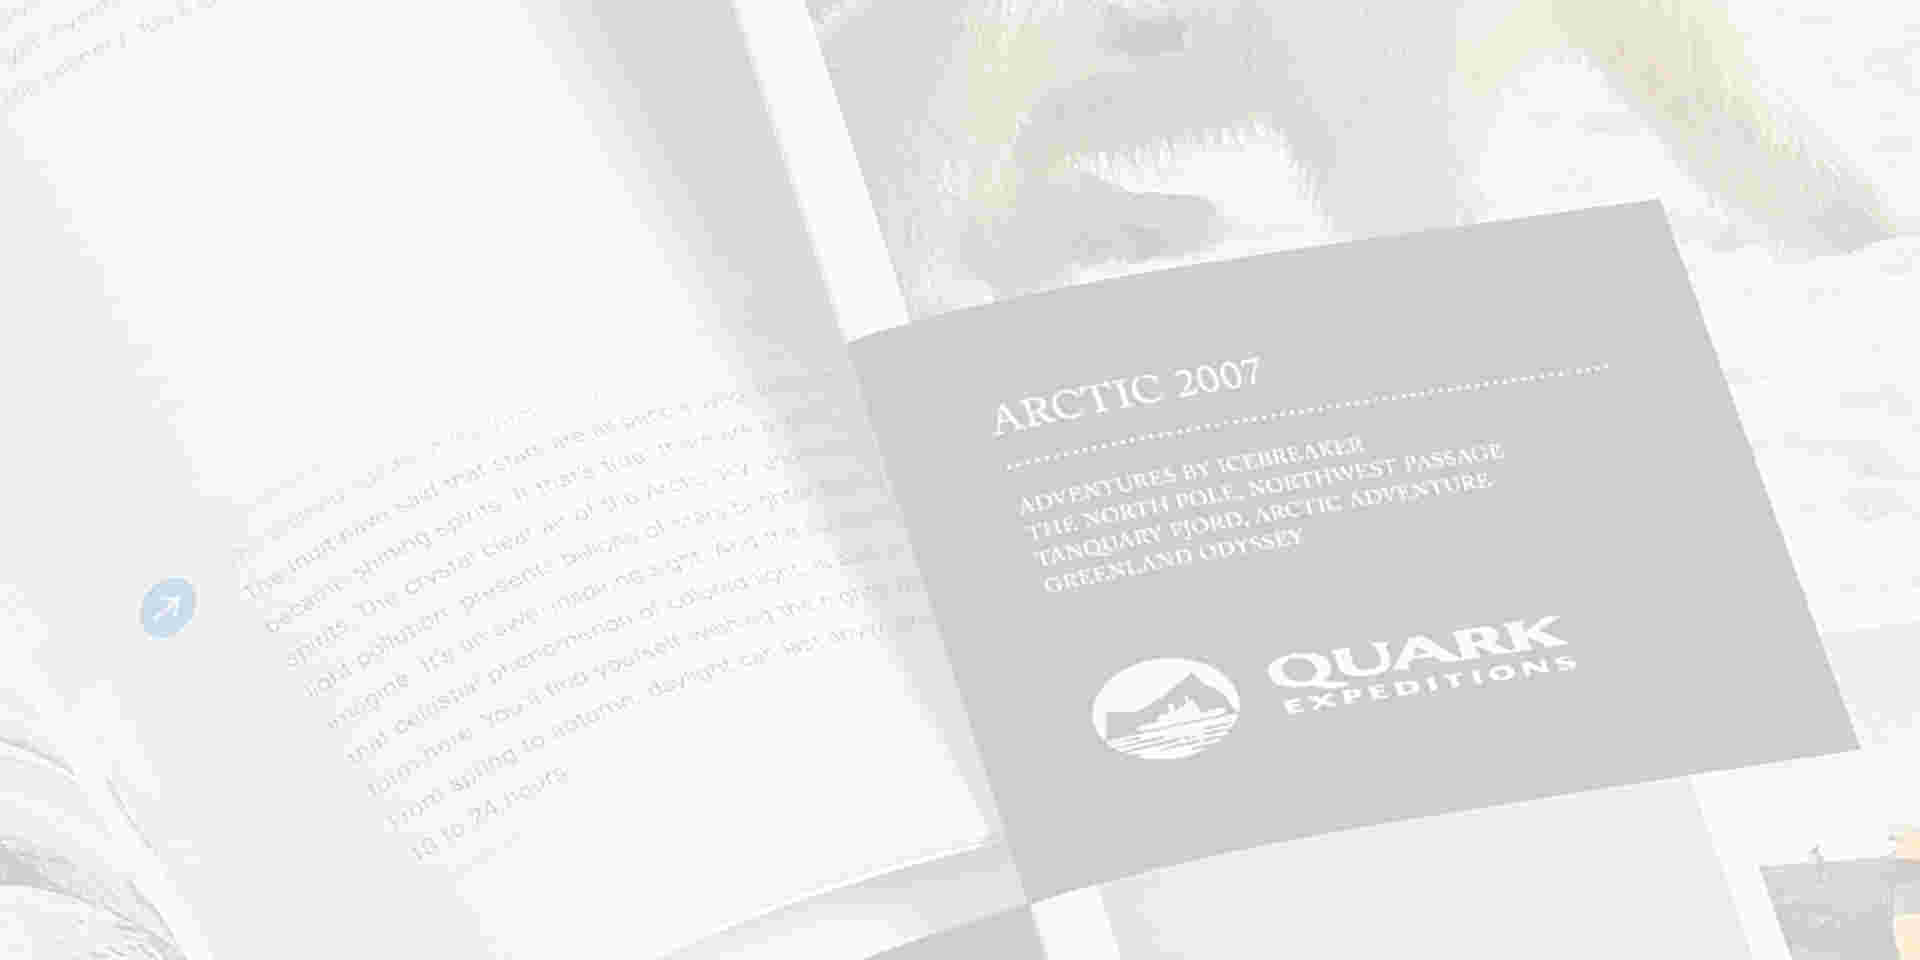 Quark Expeditions - quark_client_brochure_hero